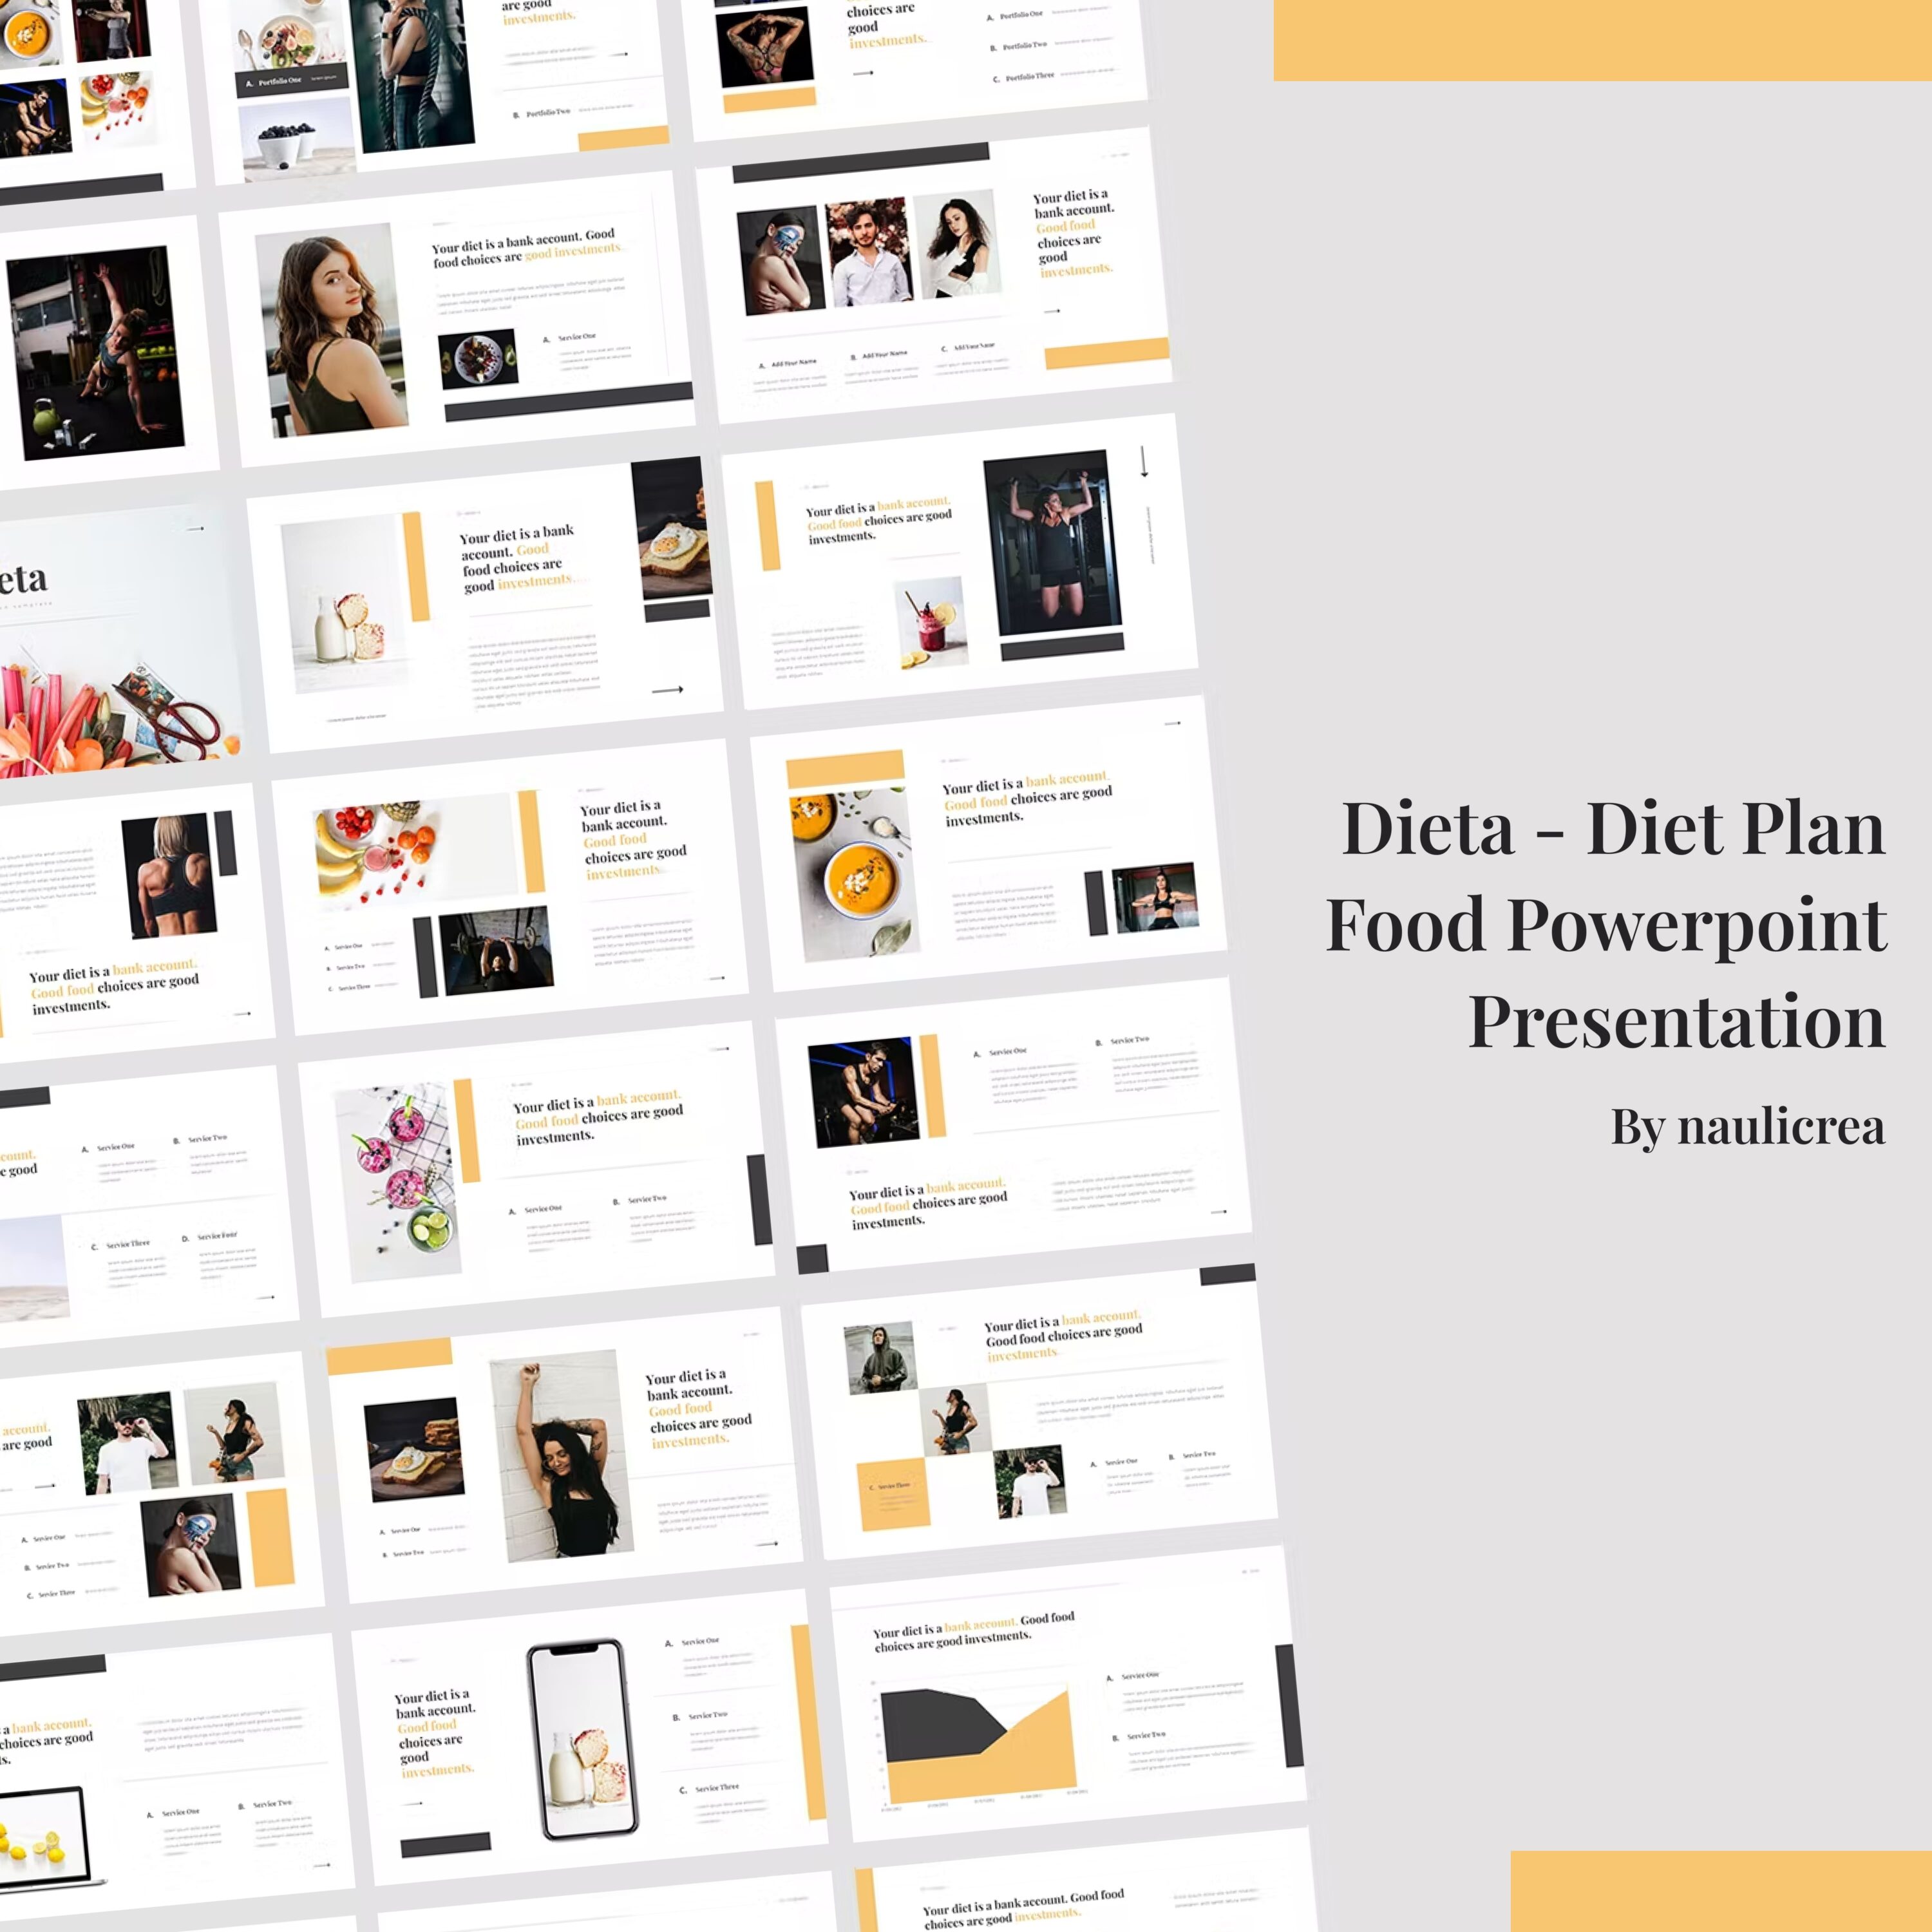 Dieta Diet Plan Food Powerpoint Presentation - main image preview.